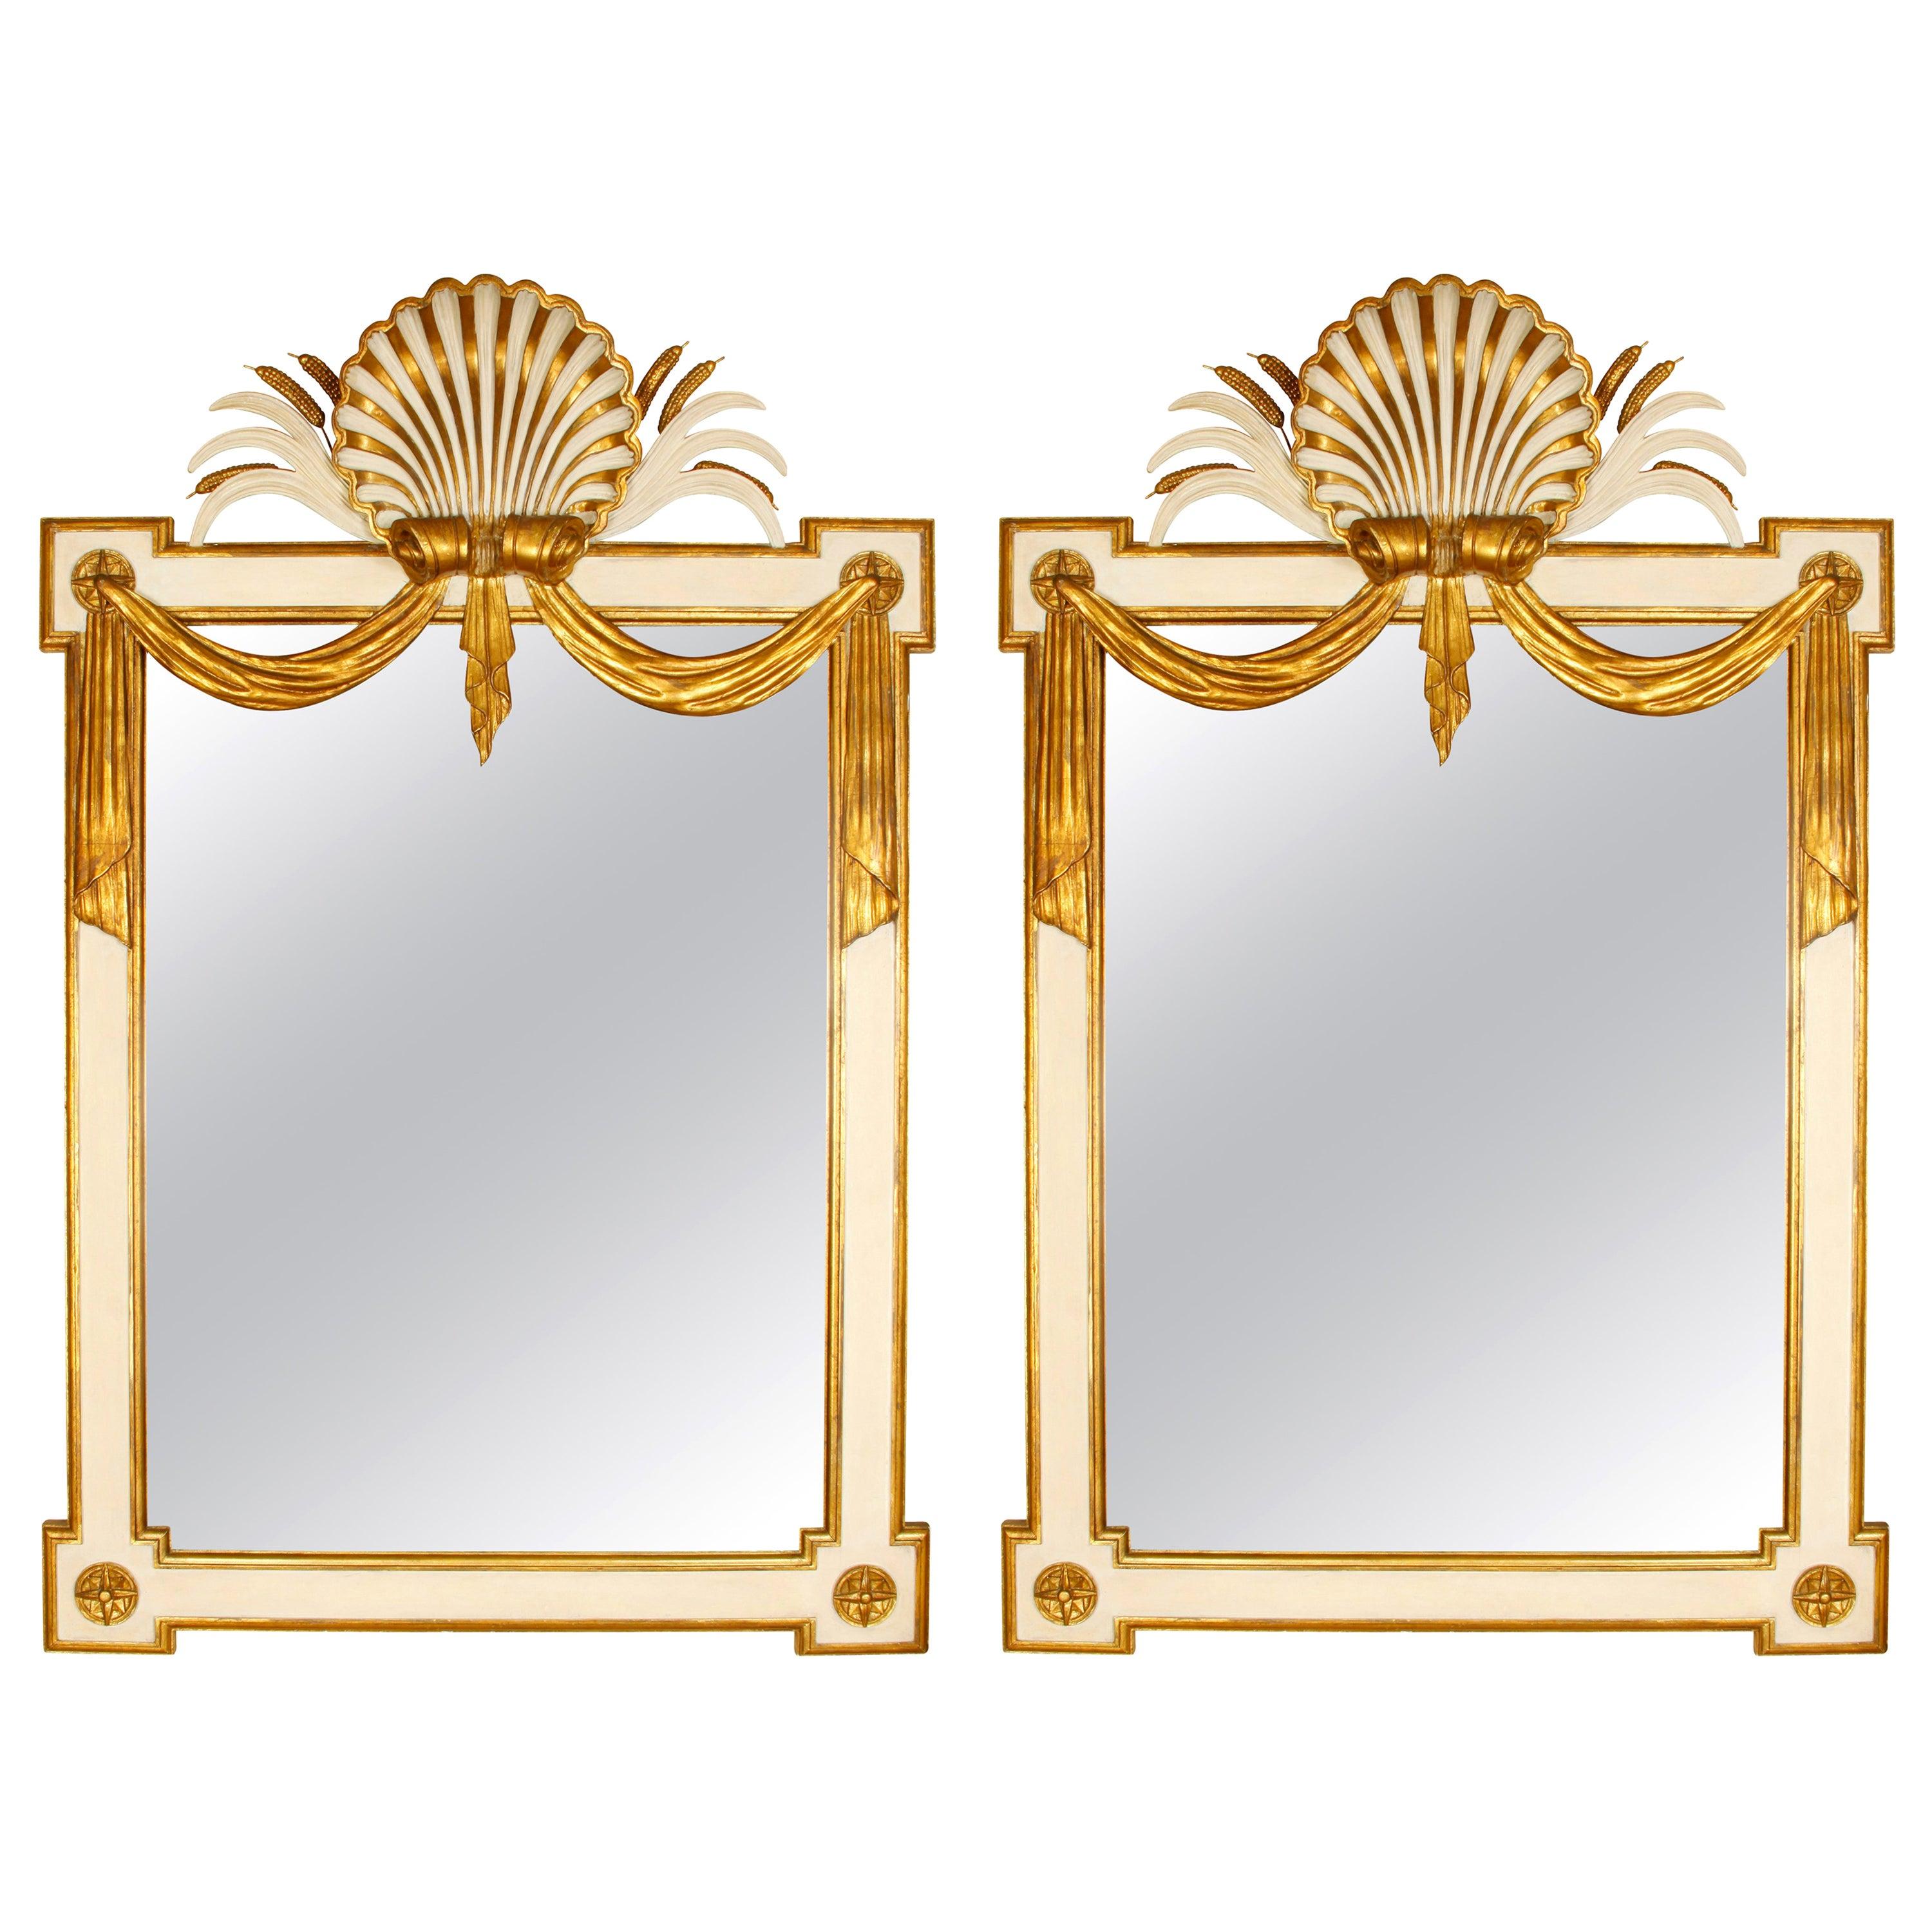 Spiegel aus vergoldetem Holz und bemaltem Holz im Regency-Stil, Paar